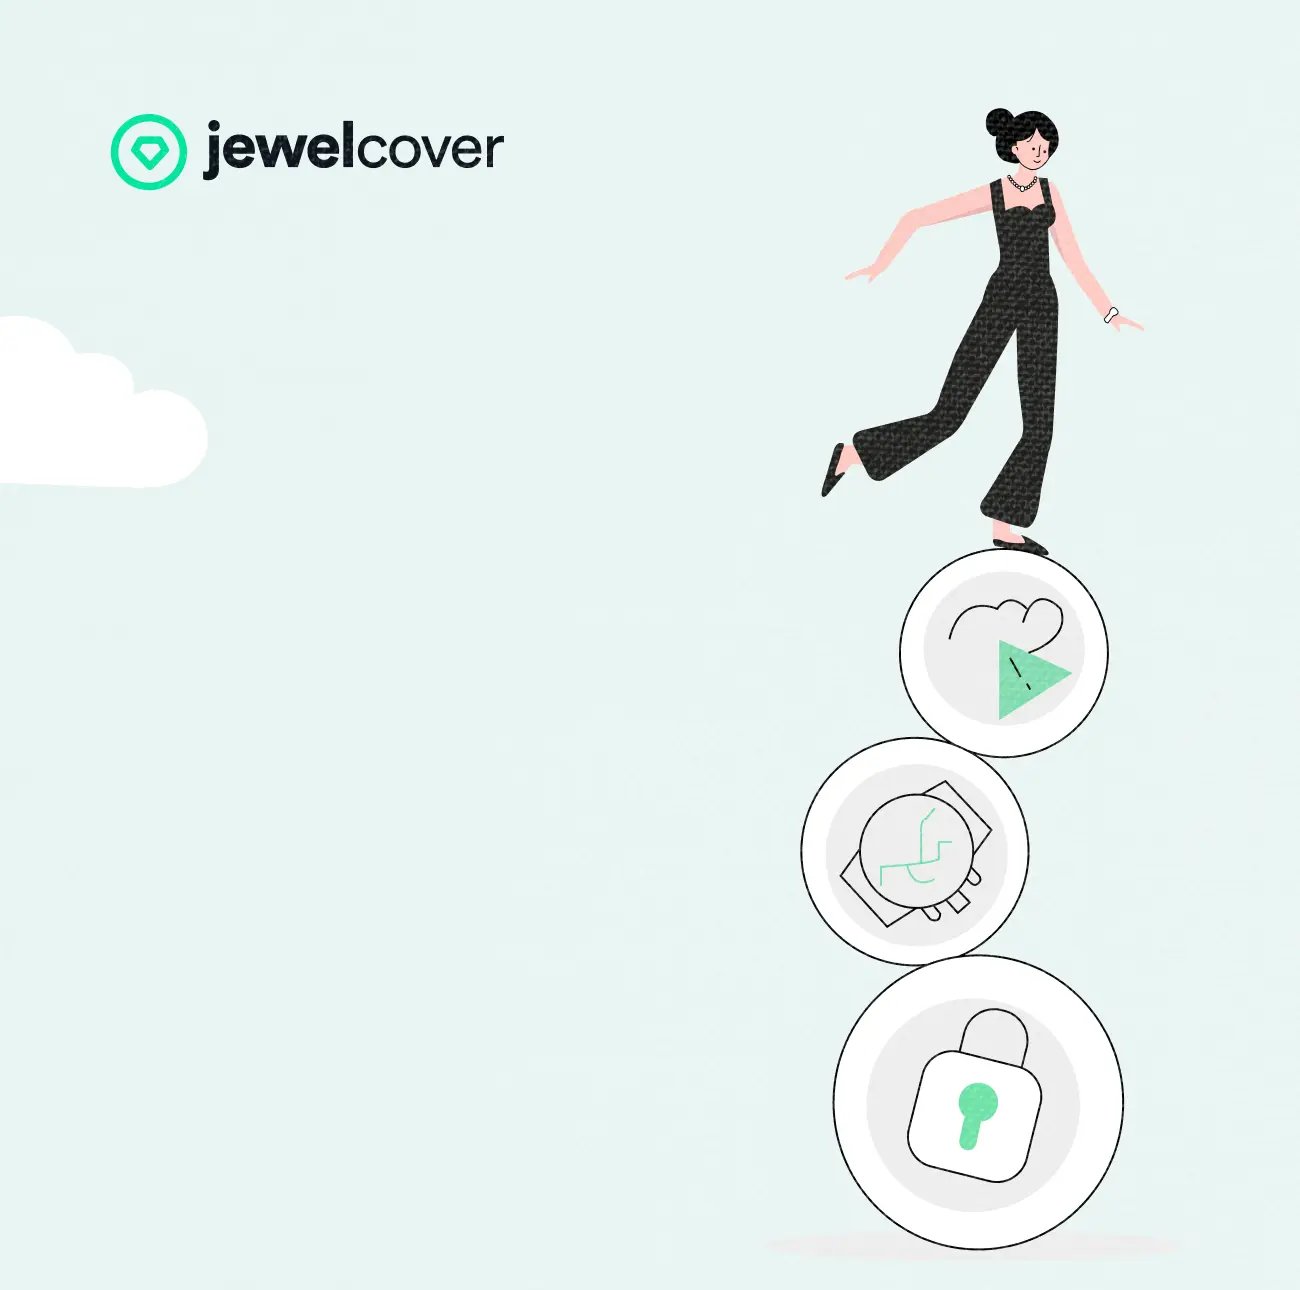 jewel-cover-image